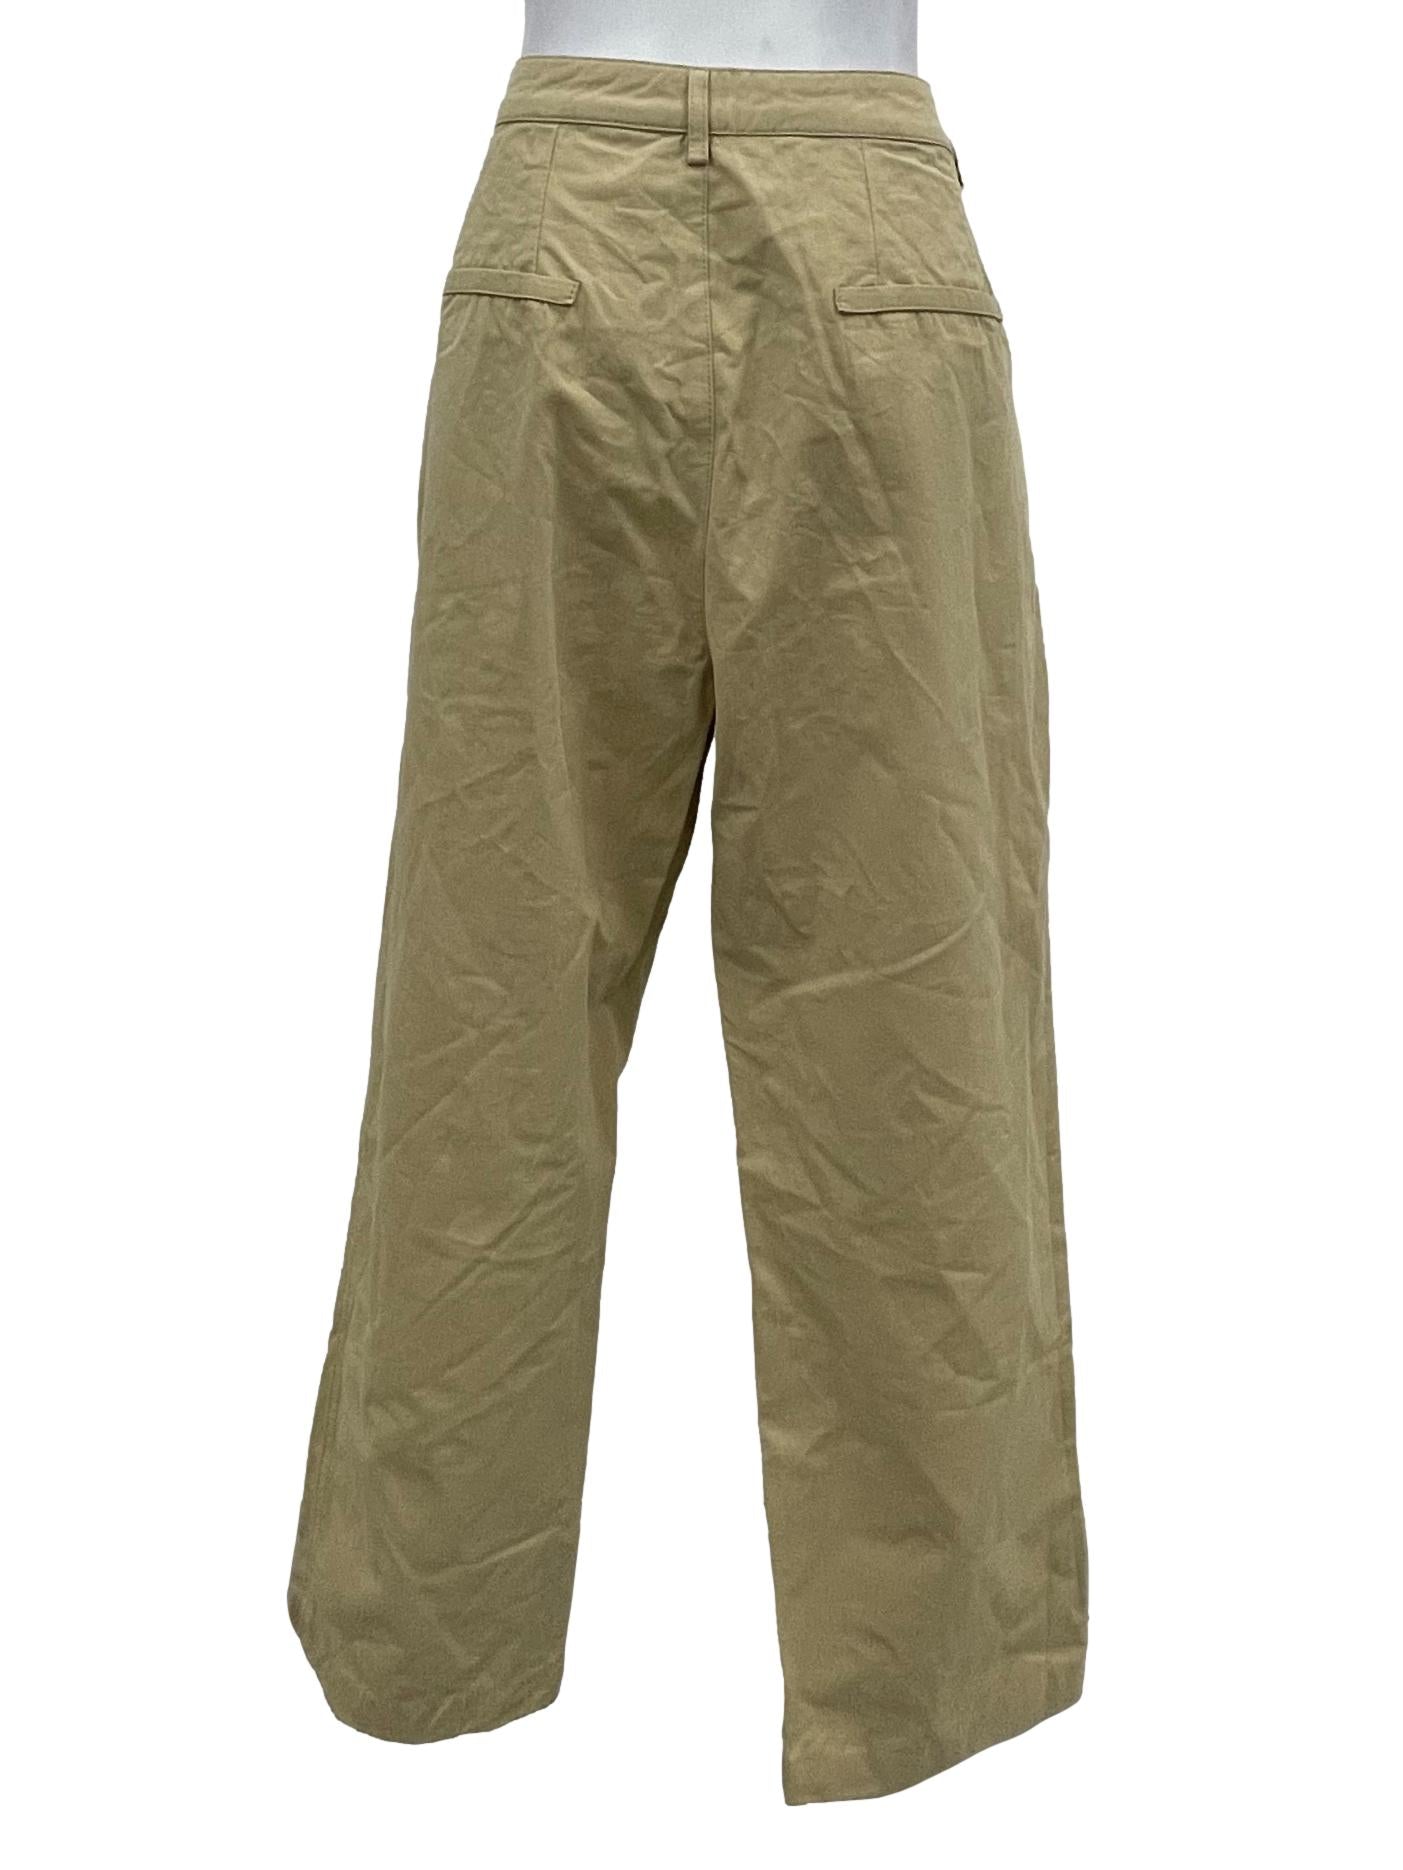 Khaki Brown Casual Straight Cut Pants